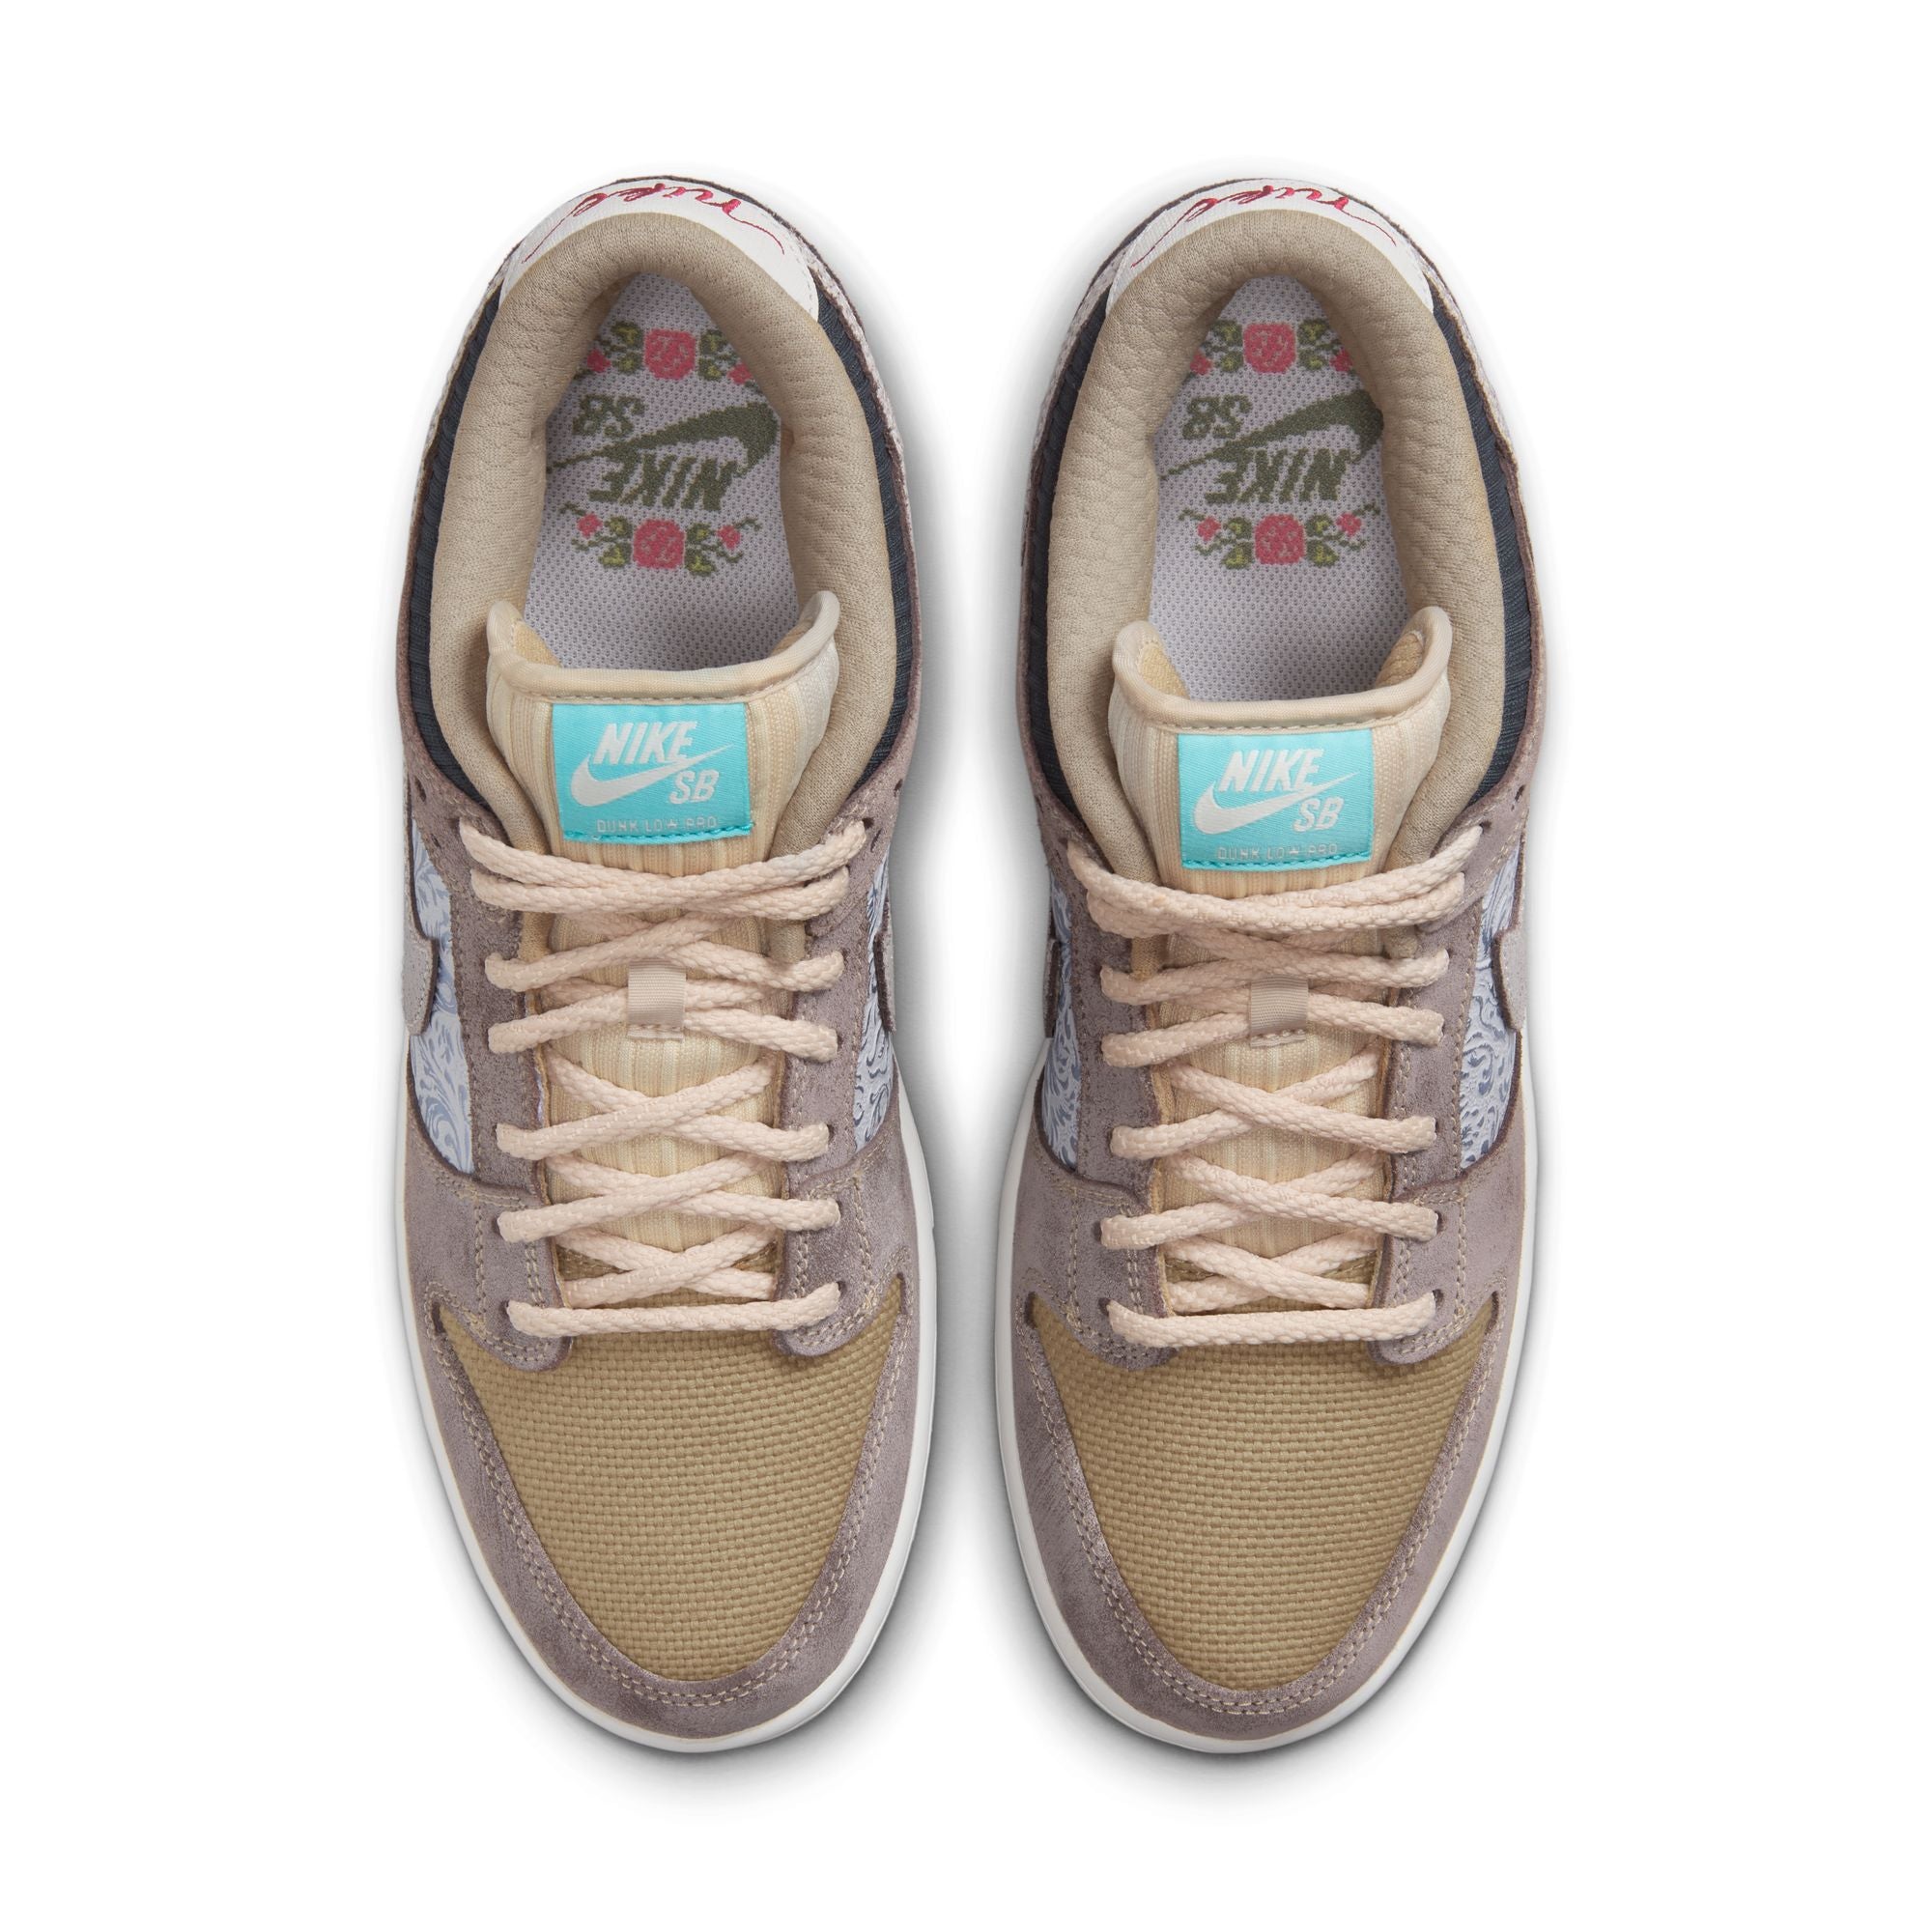 RAFFLE! Nike SB Dunk Low Pro Premium Shoes - Big Money Savings